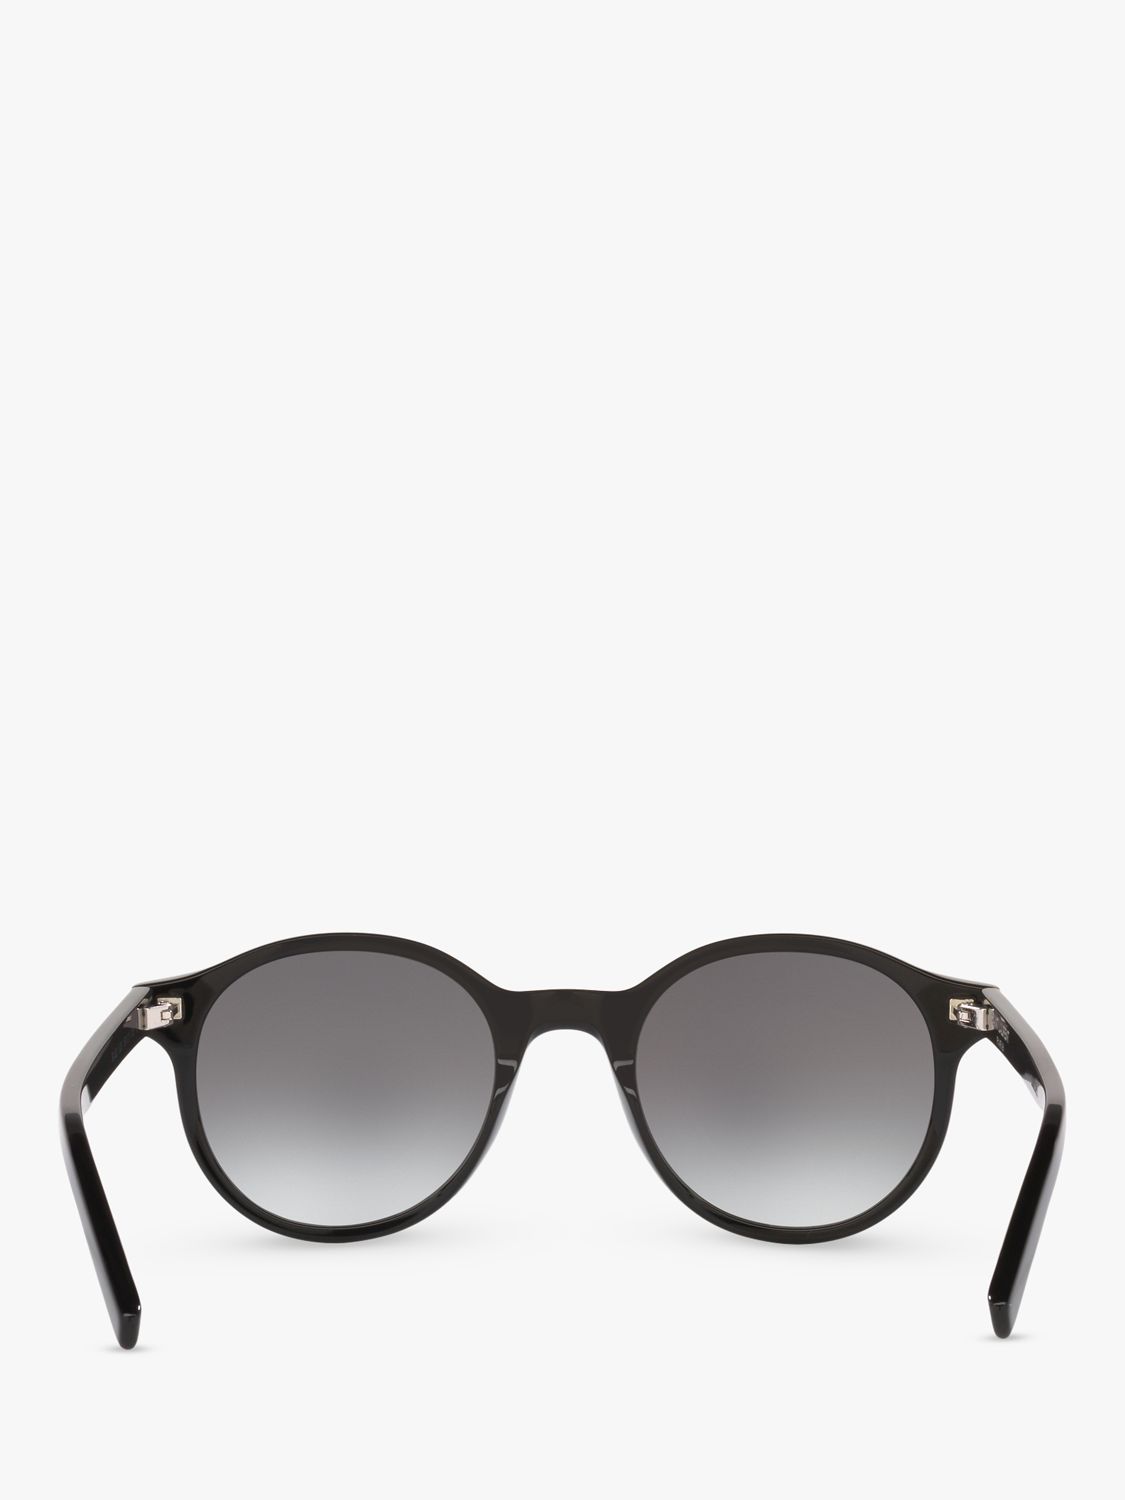 Buy Yves Saint Laurent SL 521 Unisex Round Sunglasses, Black/Grey Gradient Online at johnlewis.com